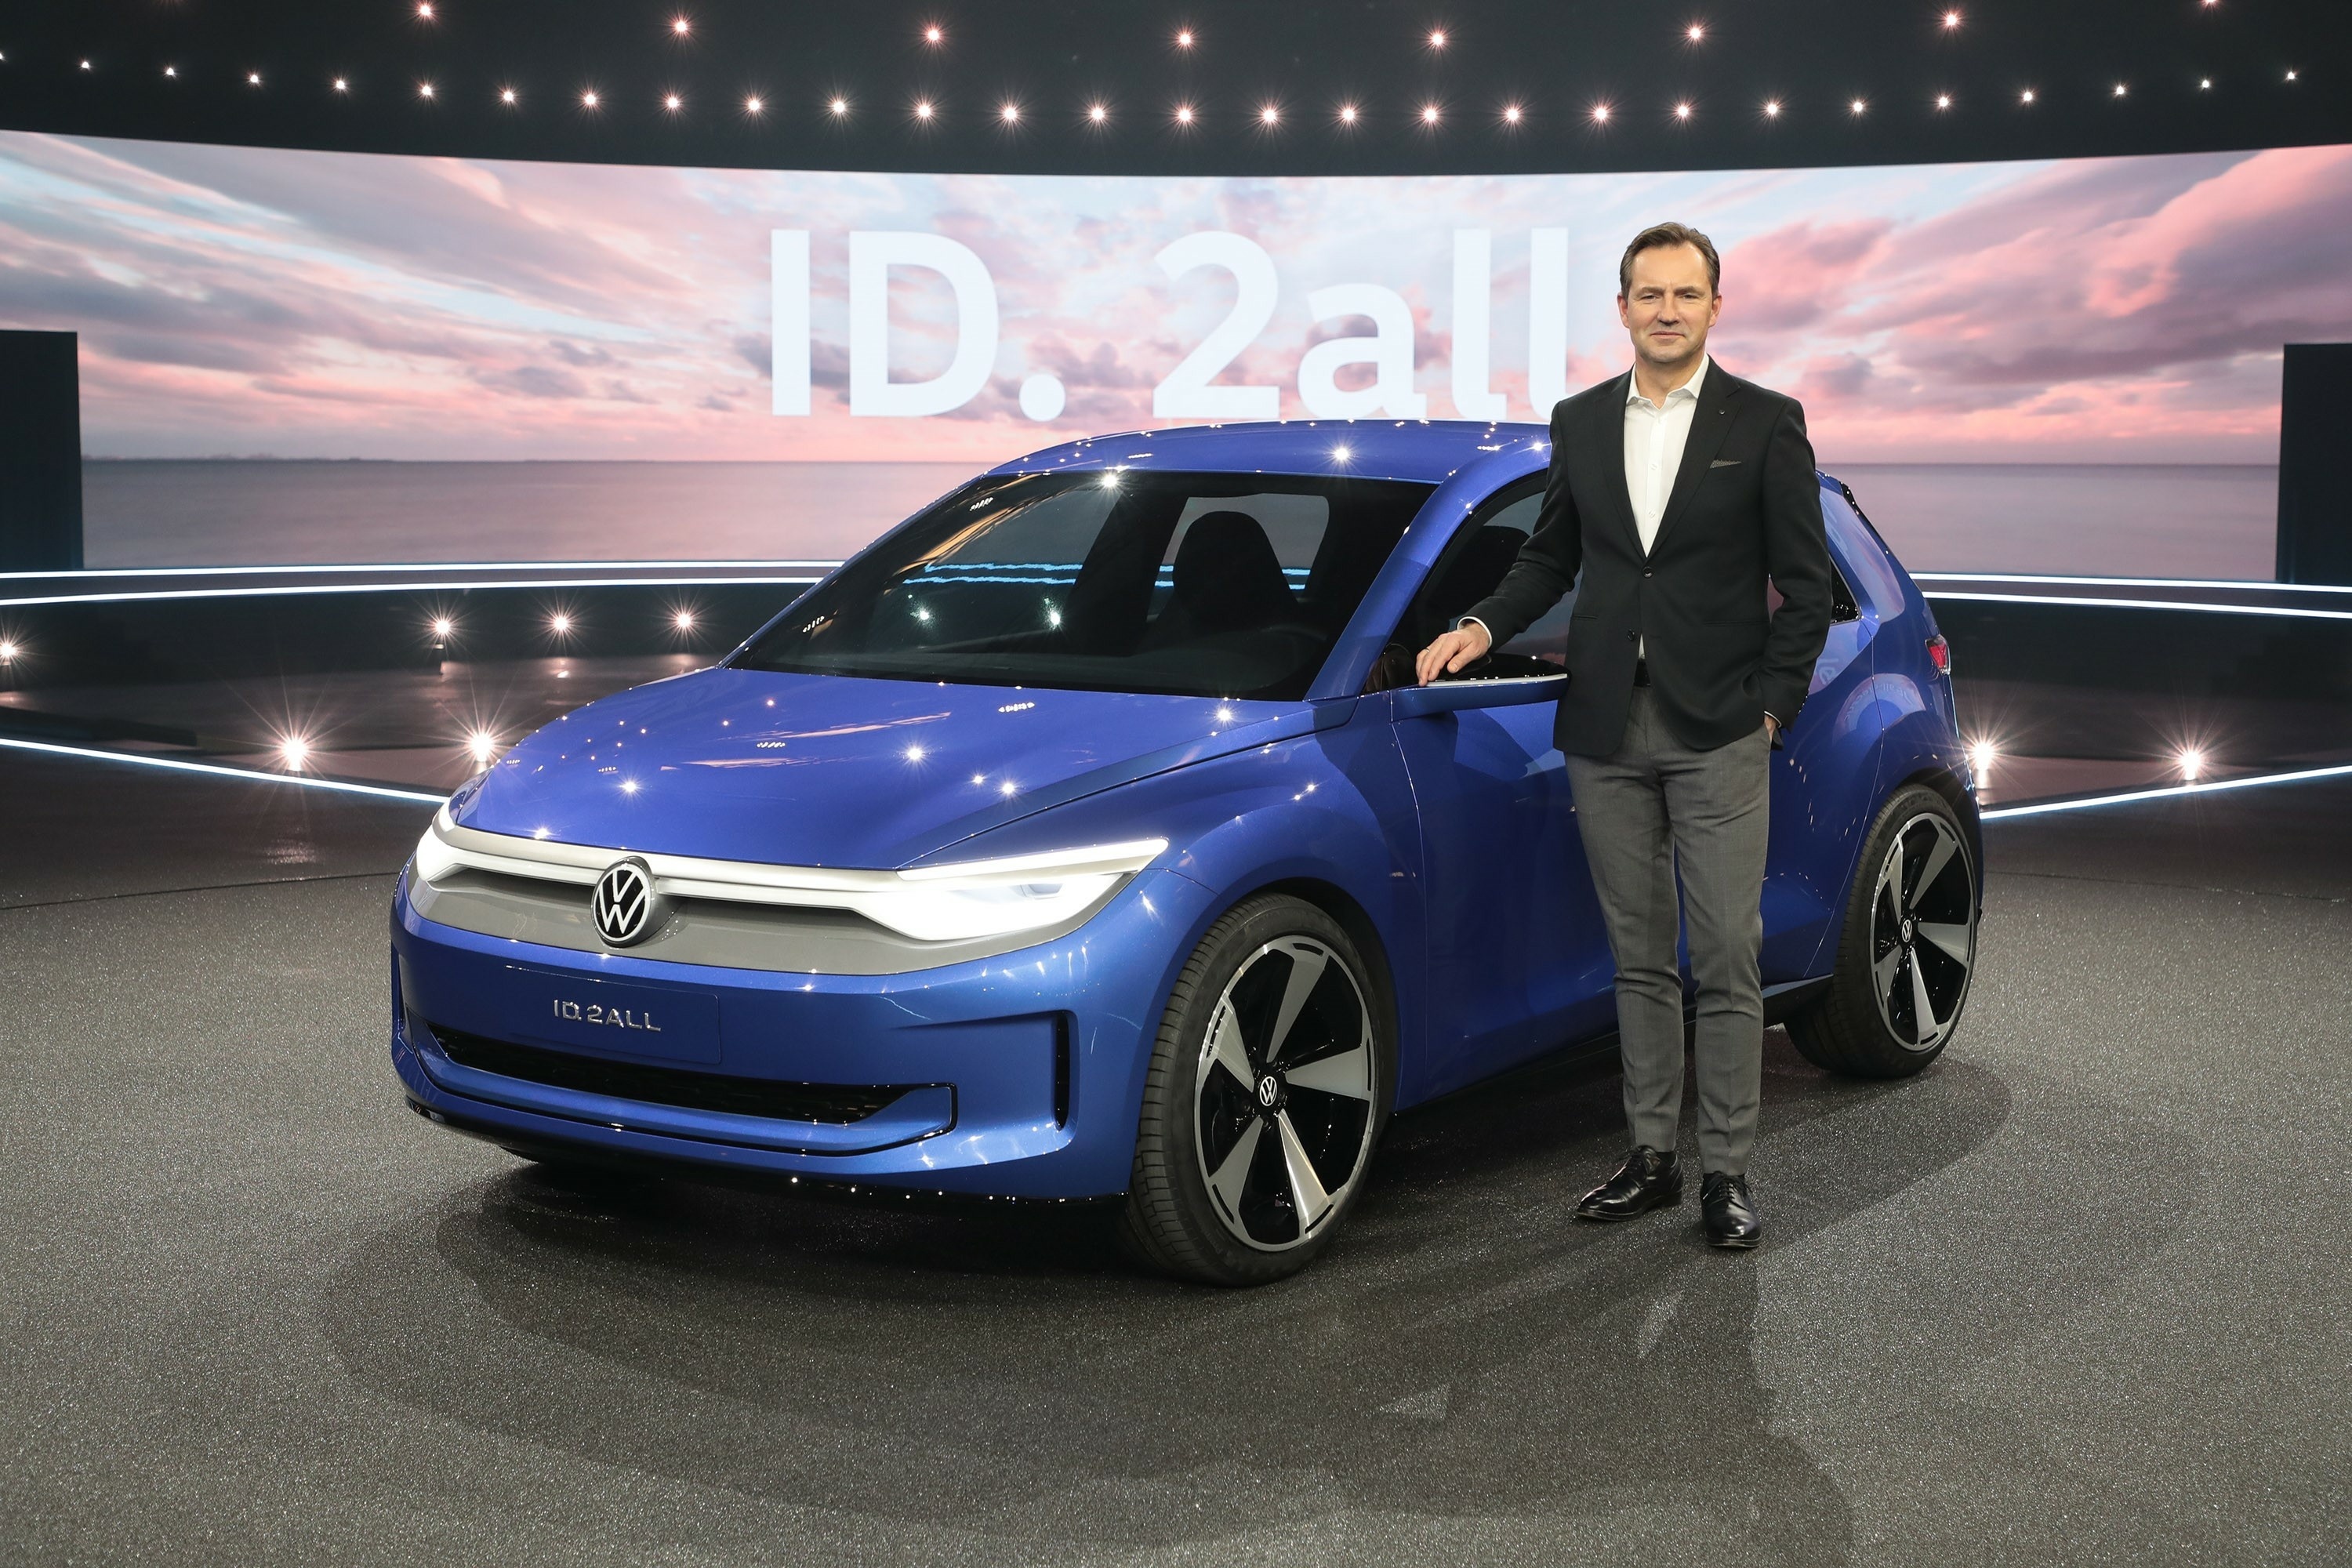 Volkswagen ID. 2all tanıtıldı